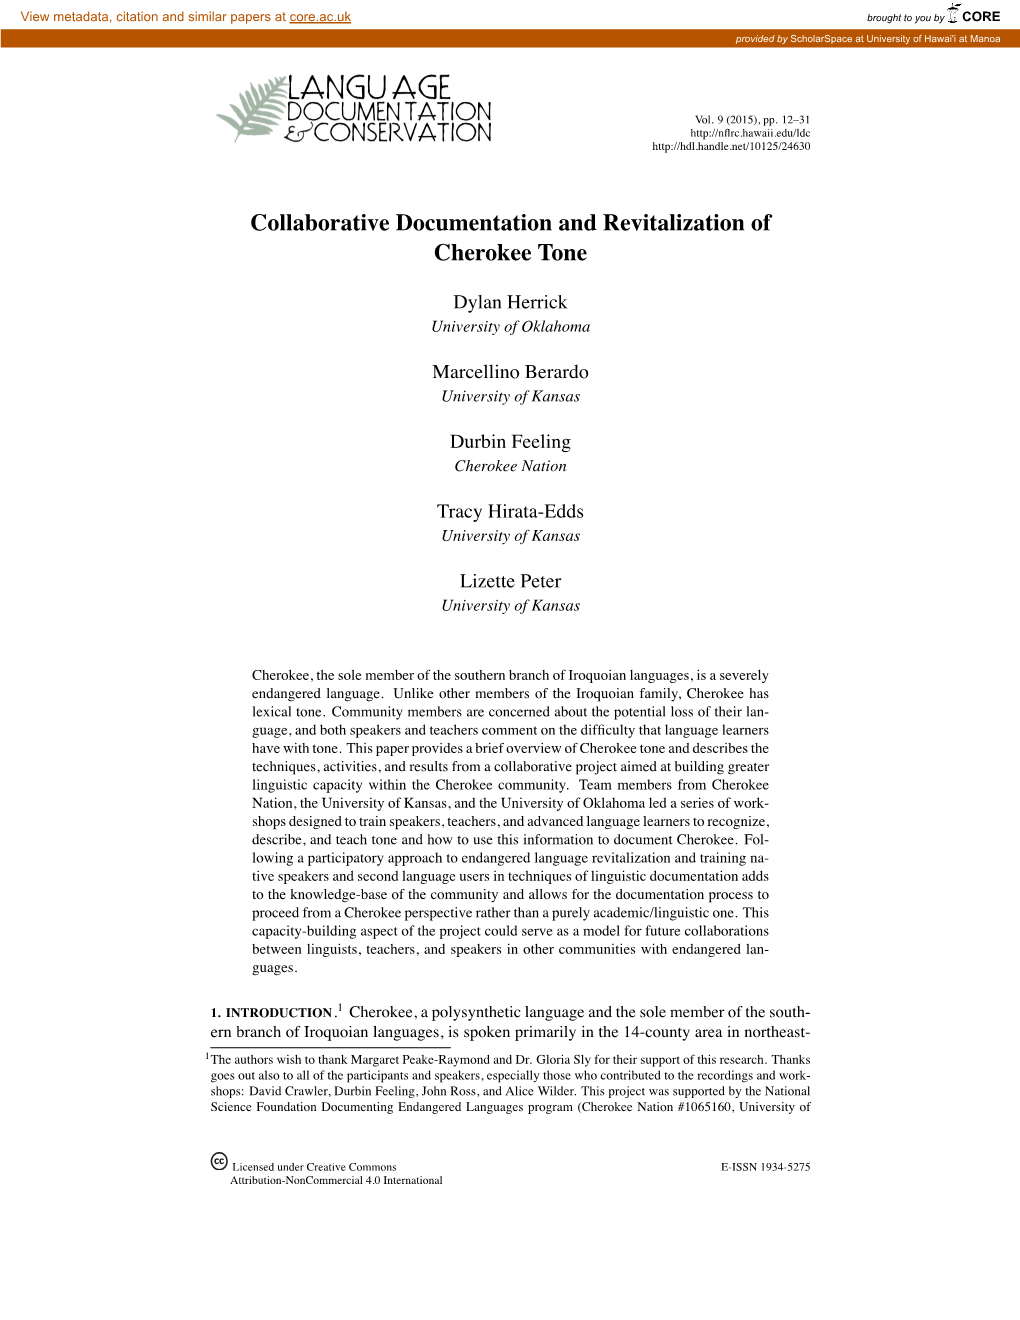 Collaborative Documentation and Revitalization of Cherokee Tone